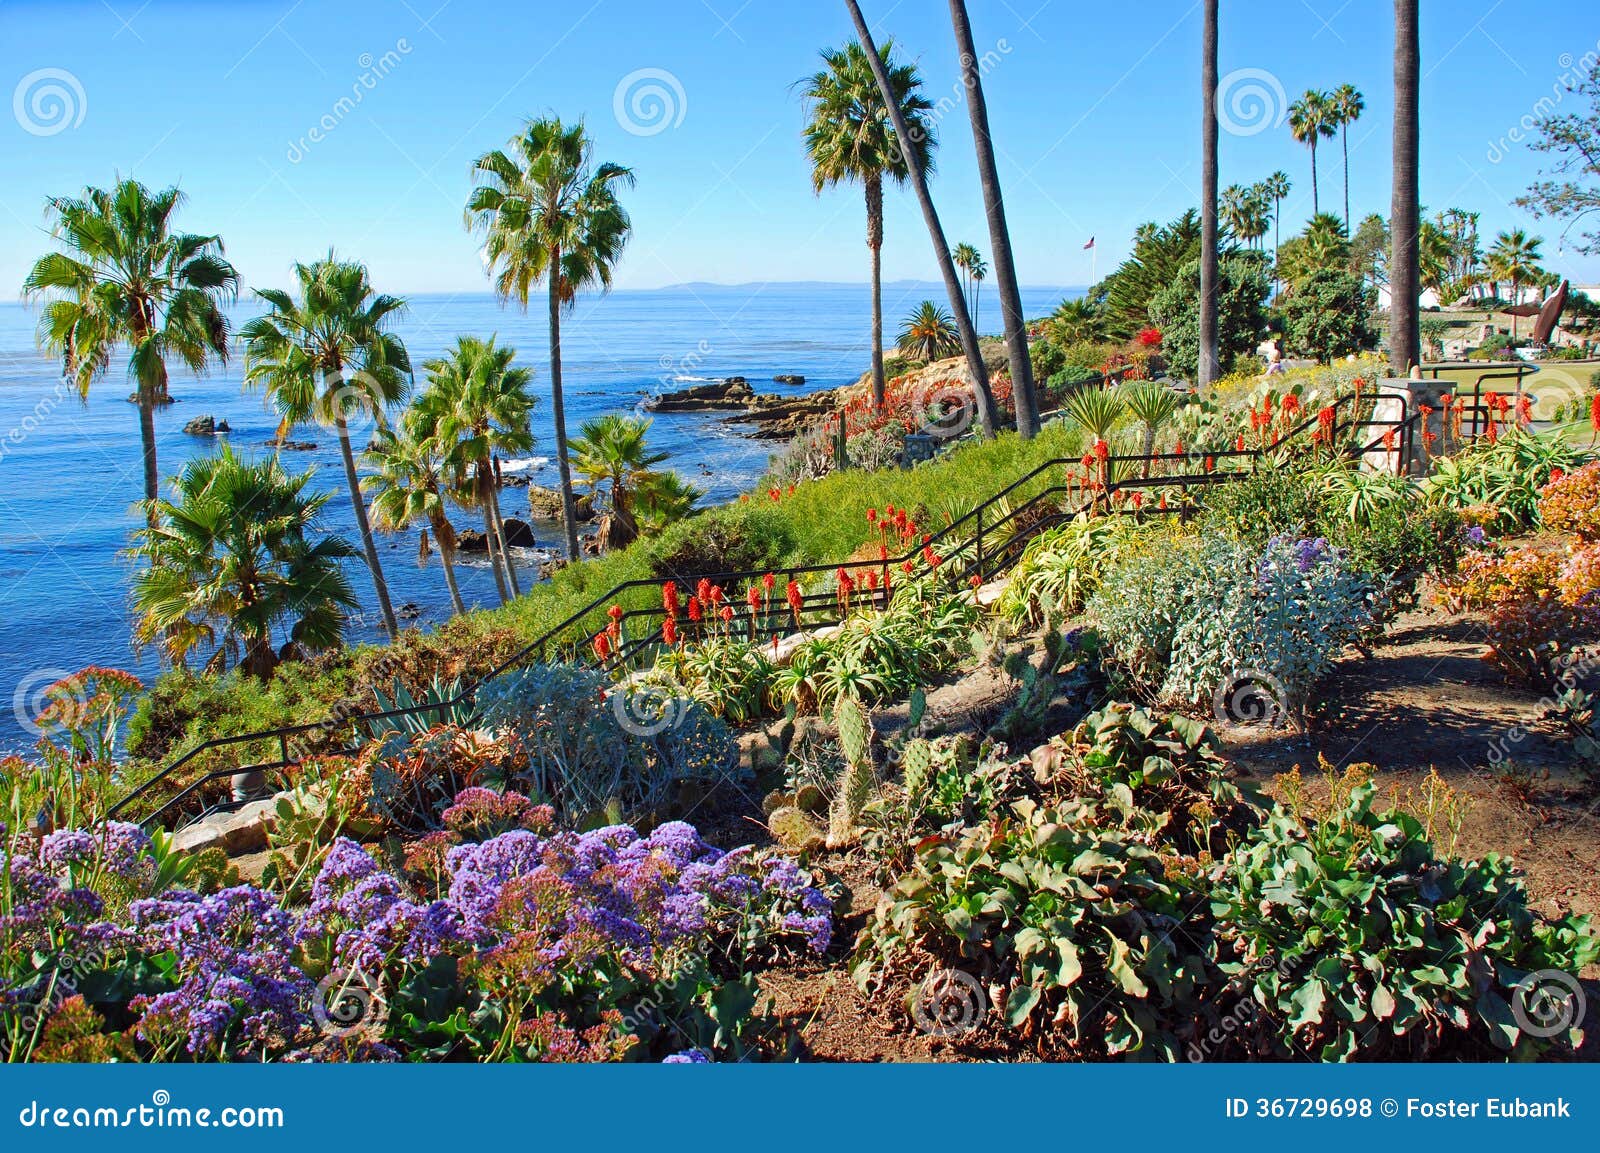 heisler park landscaped gardens, laguna beach, california.